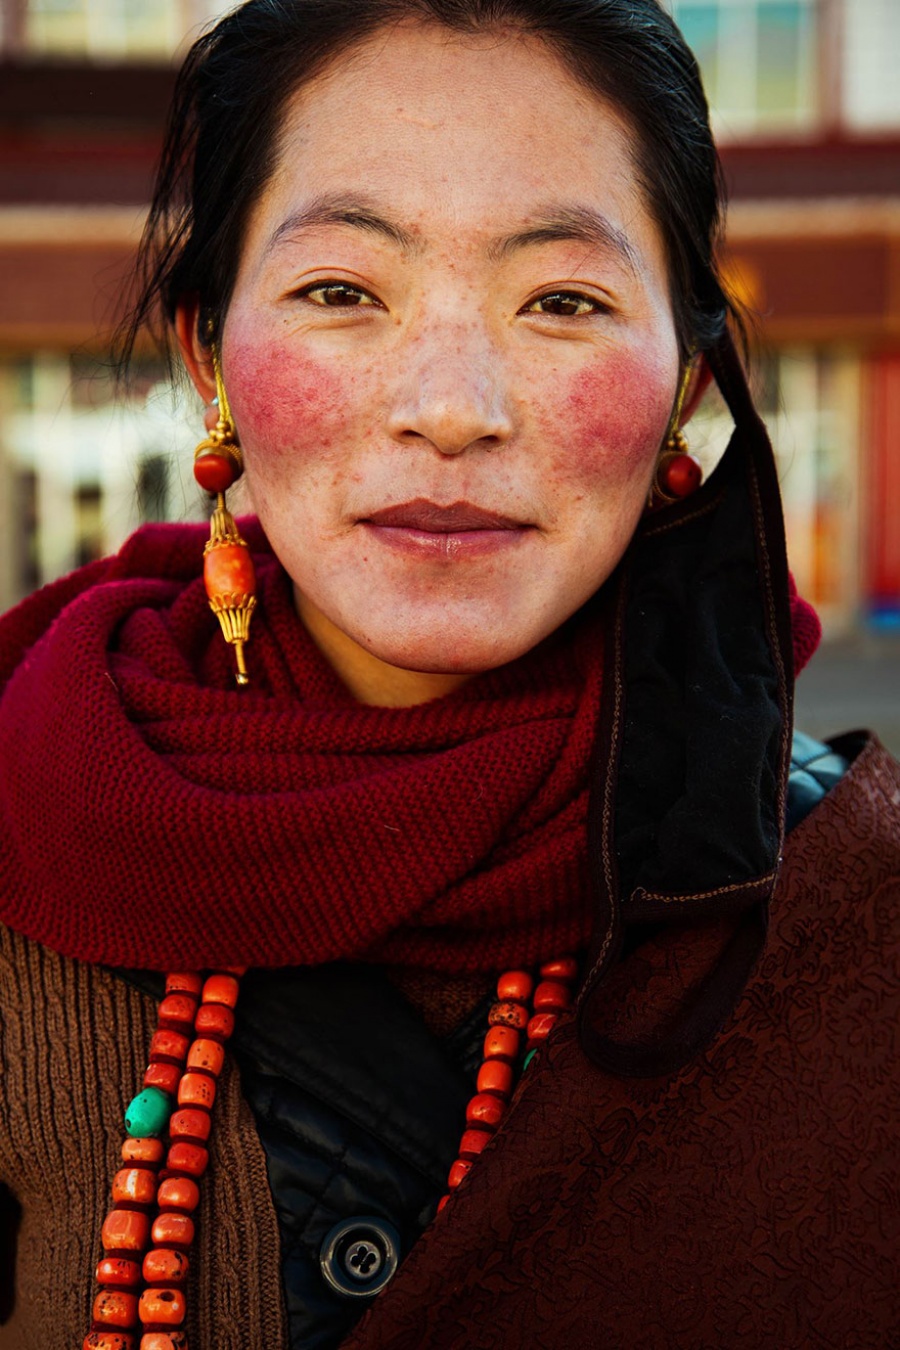 196455-r3l8t8d-900-different-countries-women-portrait-photography-michaela-noroc-15-tibet-china-1.jpg